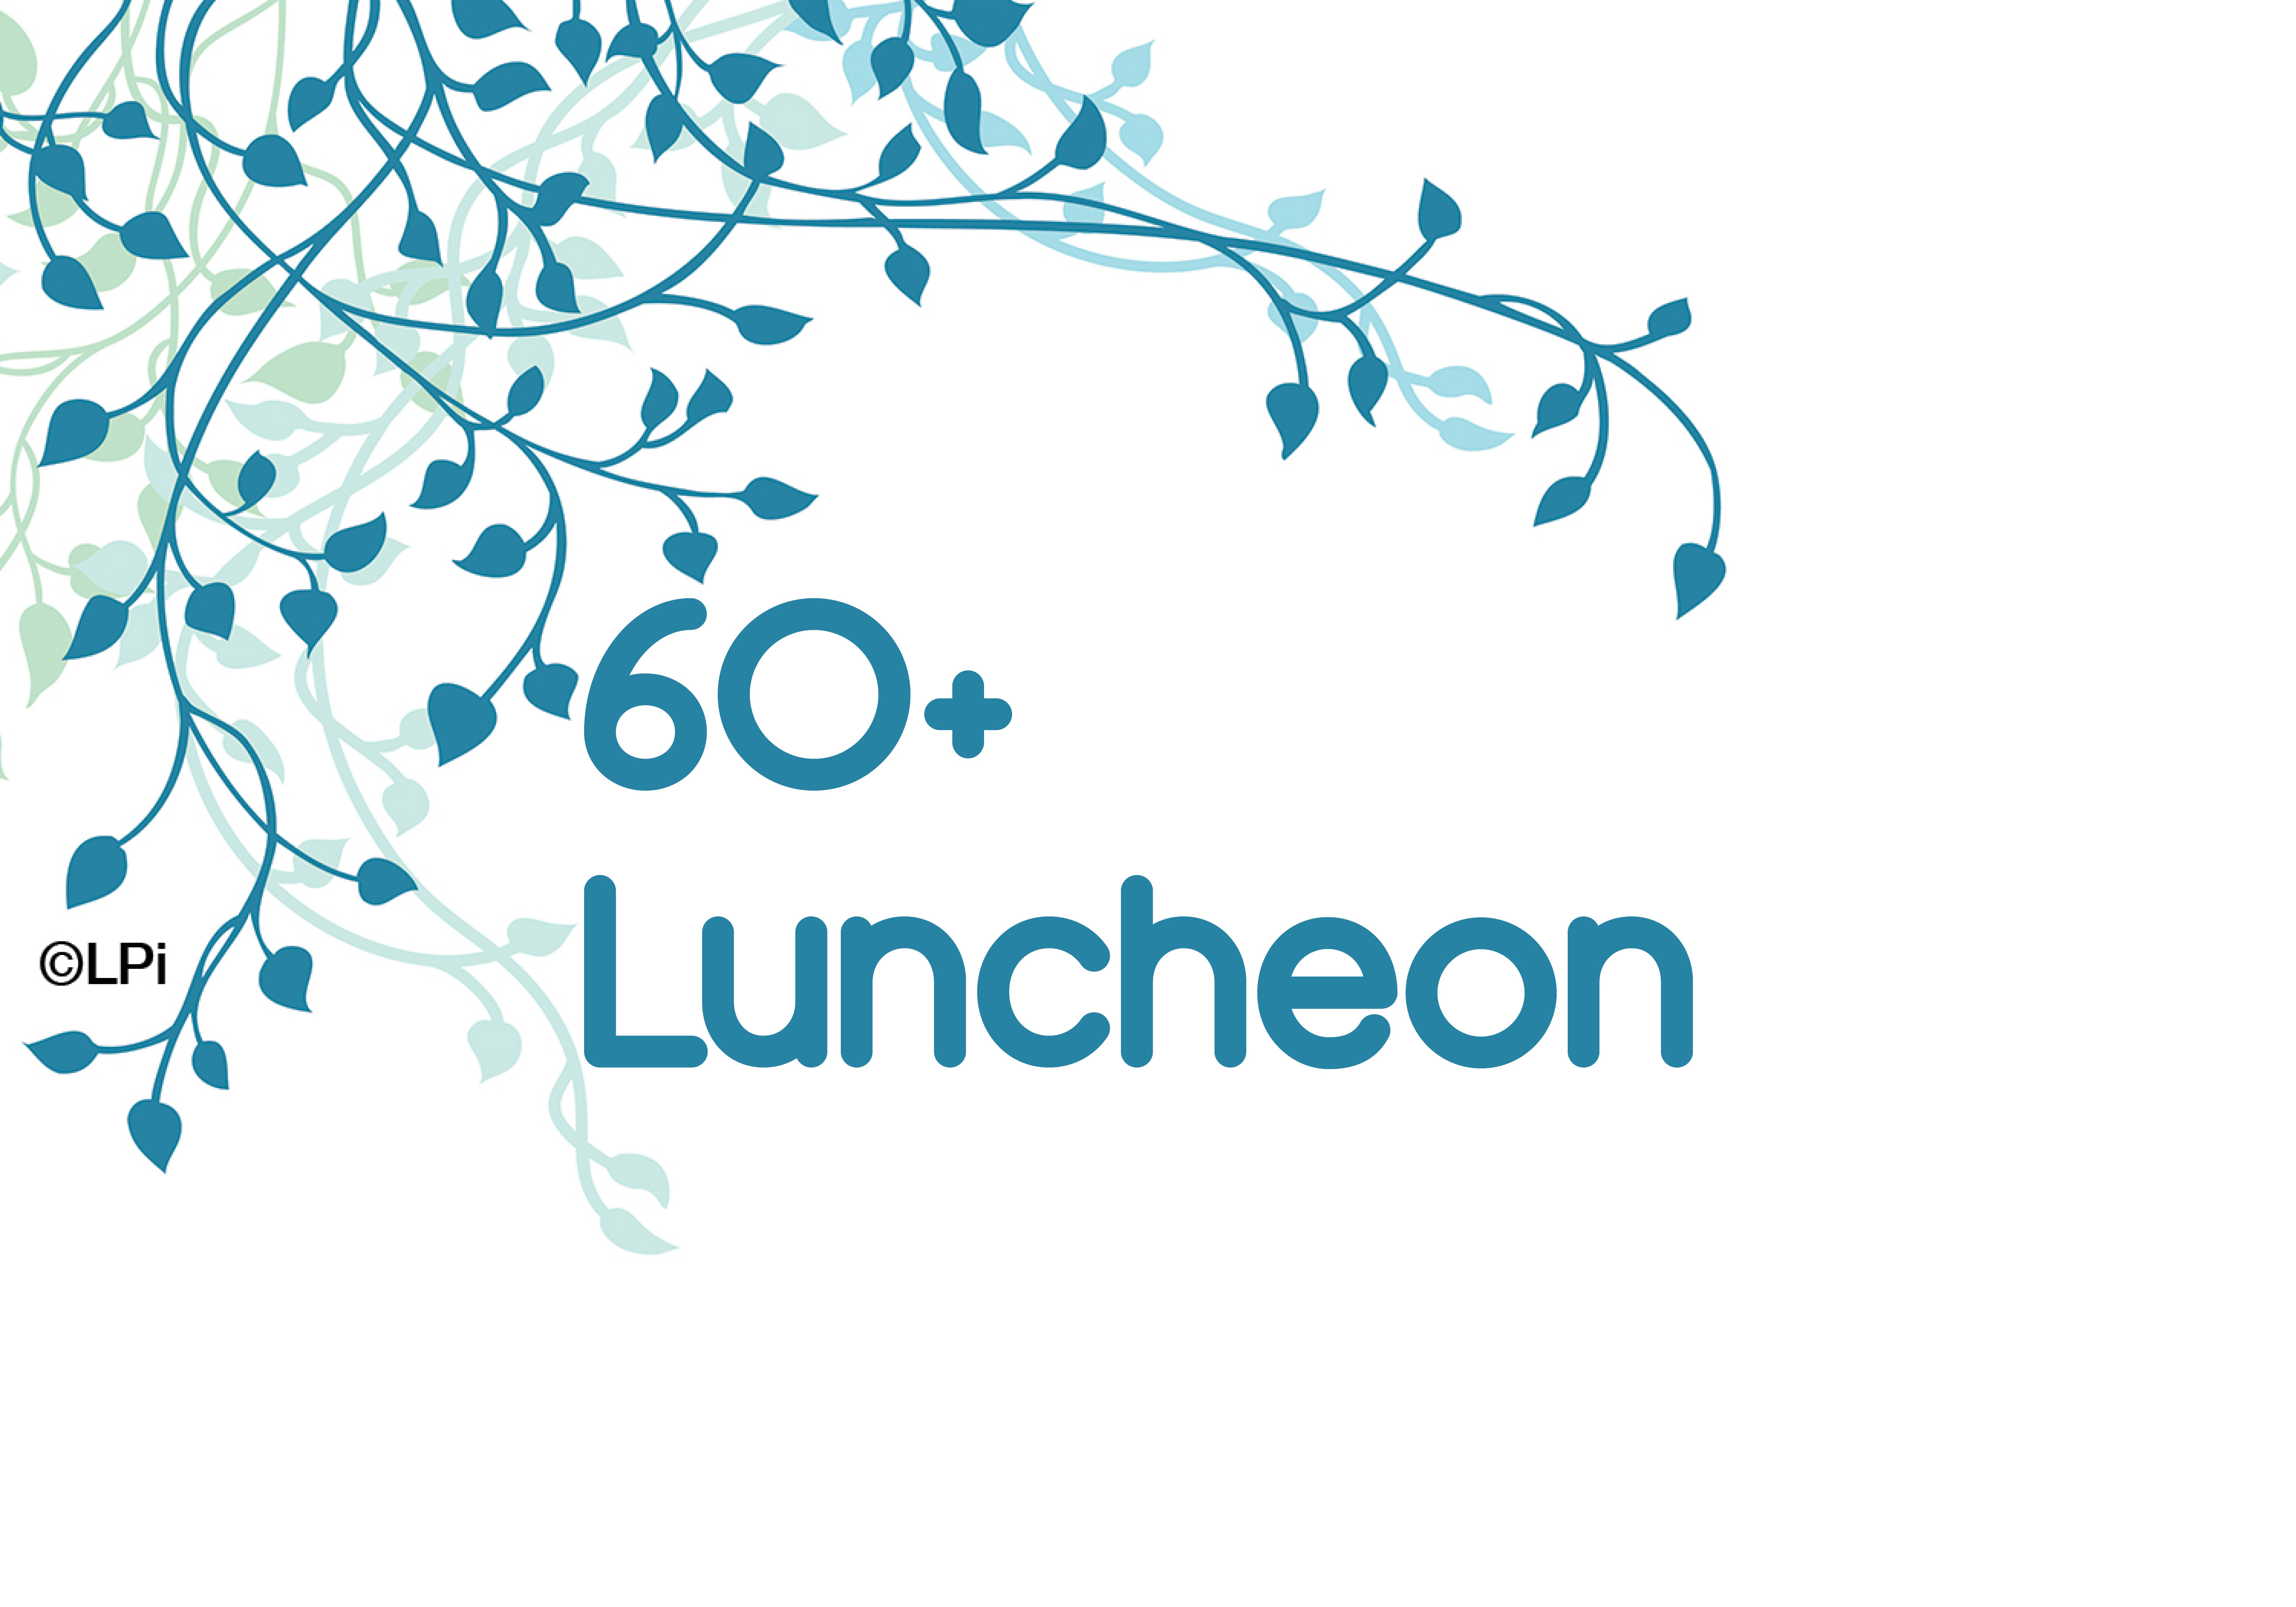 60+ Luncheon - Oct. 17